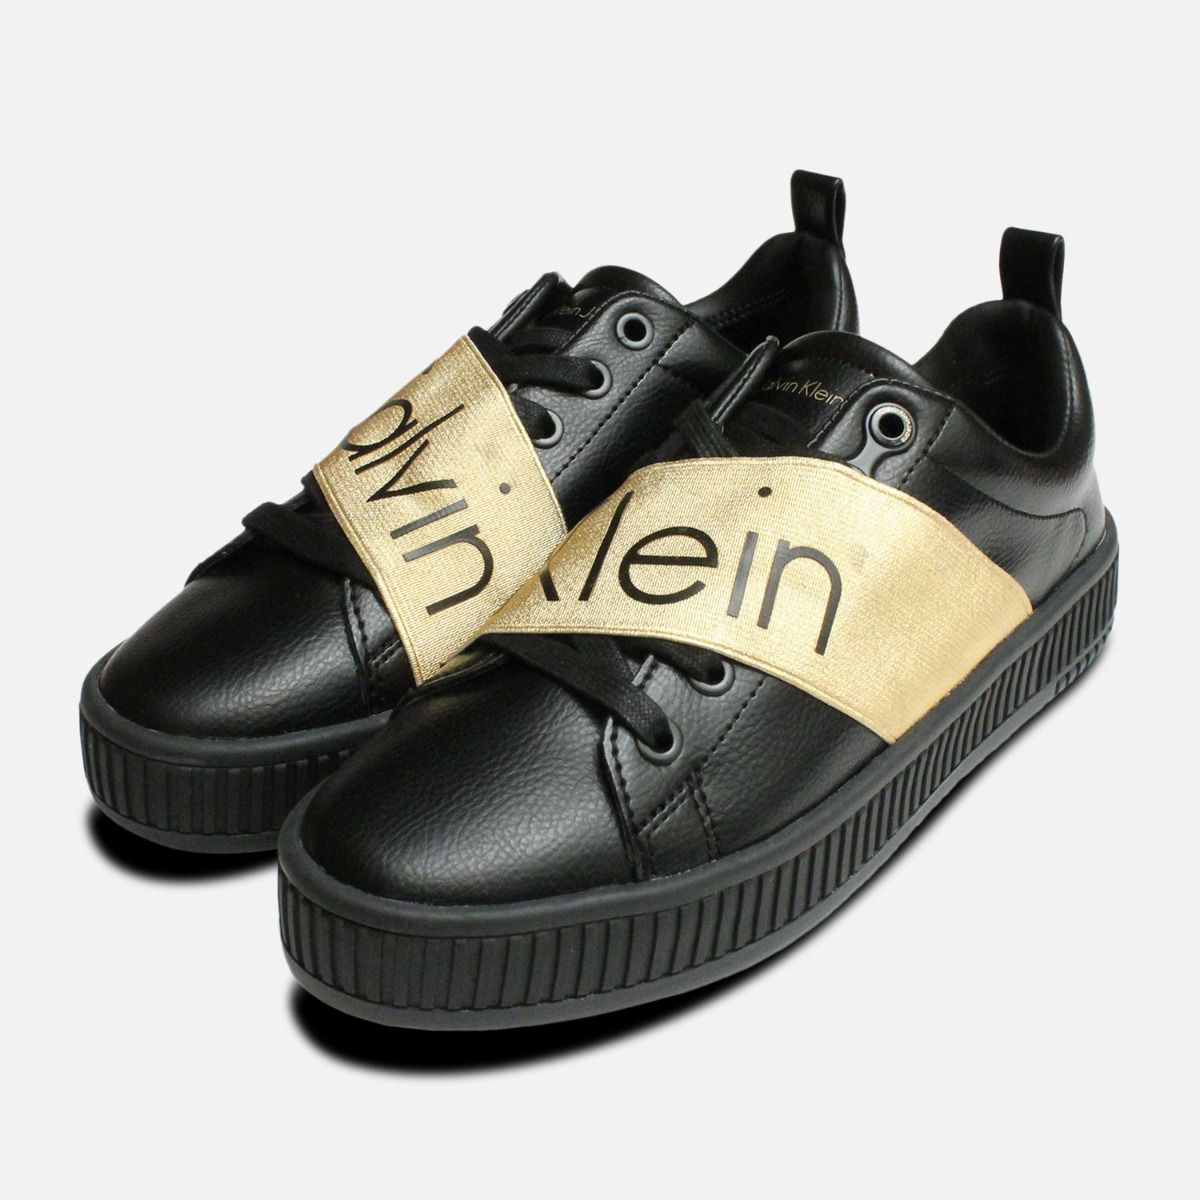 Exclusive Gold & Black Calvin Klein Antonia Shoes